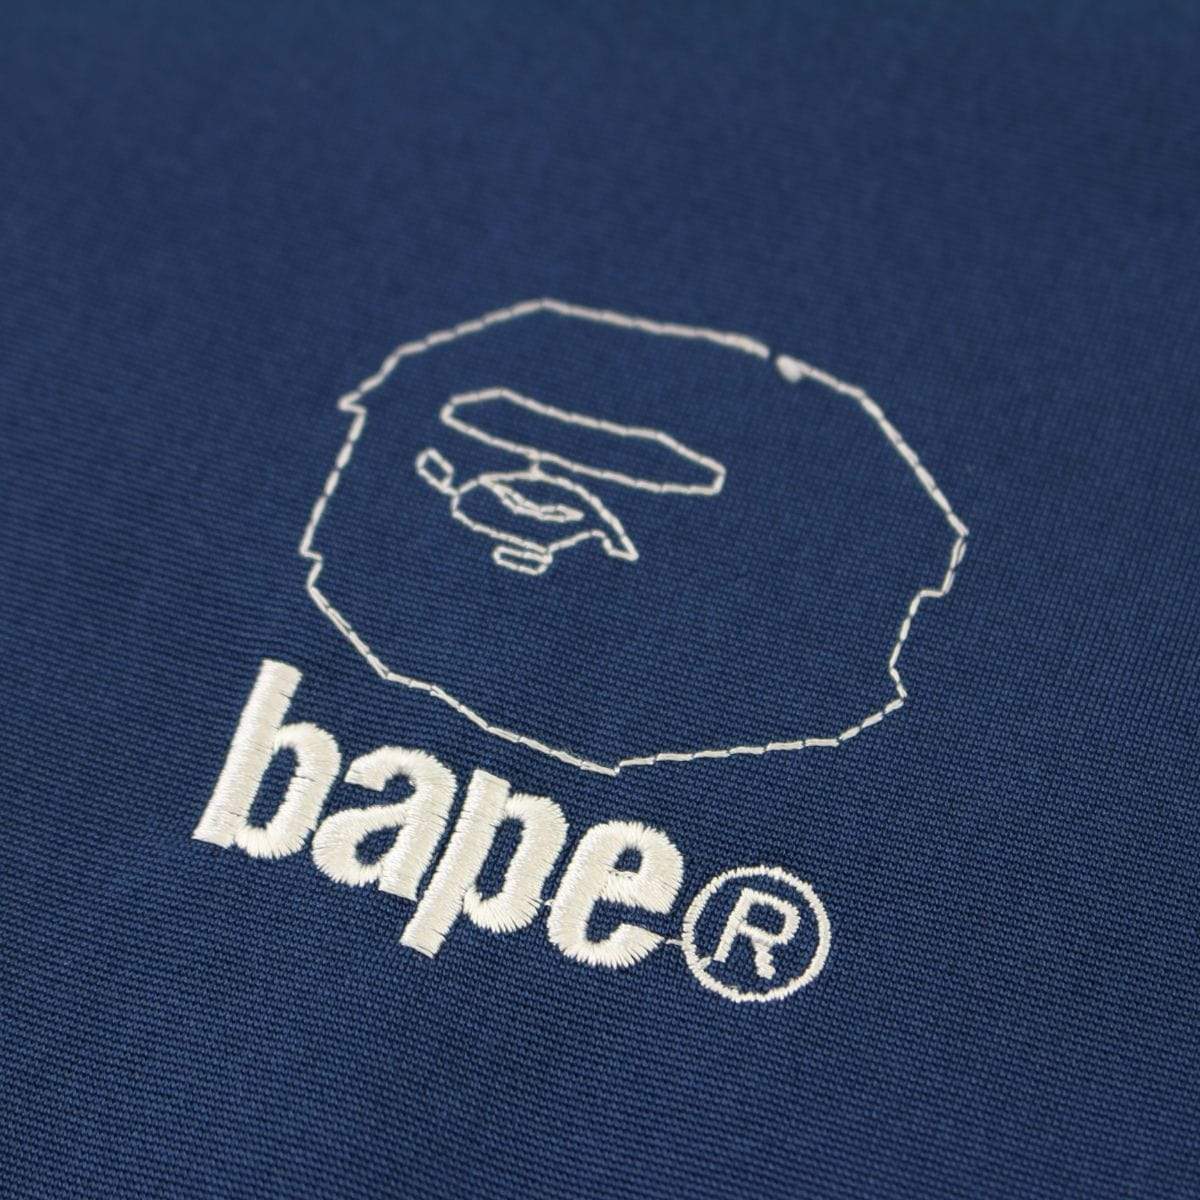 Bape Stitch Big Ape Logo Track Jacket Navy - SaruGeneral